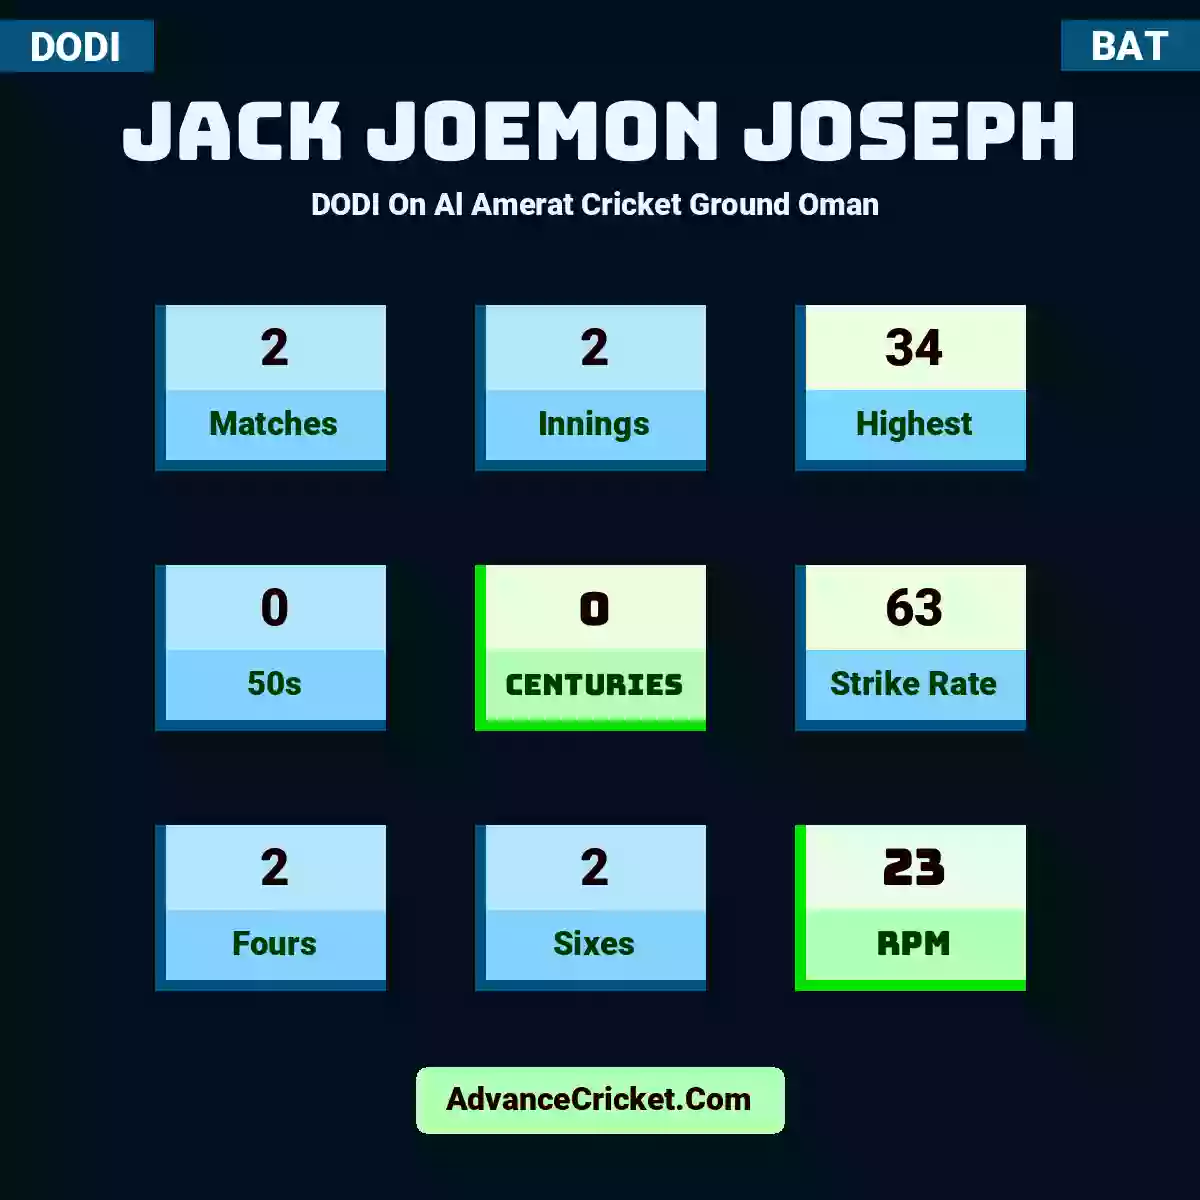 Jack Joemon Joseph DODI  On Al Amerat Cricket Ground Oman , Jack Joemon Joseph played 2 matches, scored 34 runs as highest, 0 half-centuries, and 0 centuries, with a strike rate of 63. J.Joemon.Joseph hit 2 fours and 2 sixes, with an RPM of 23.